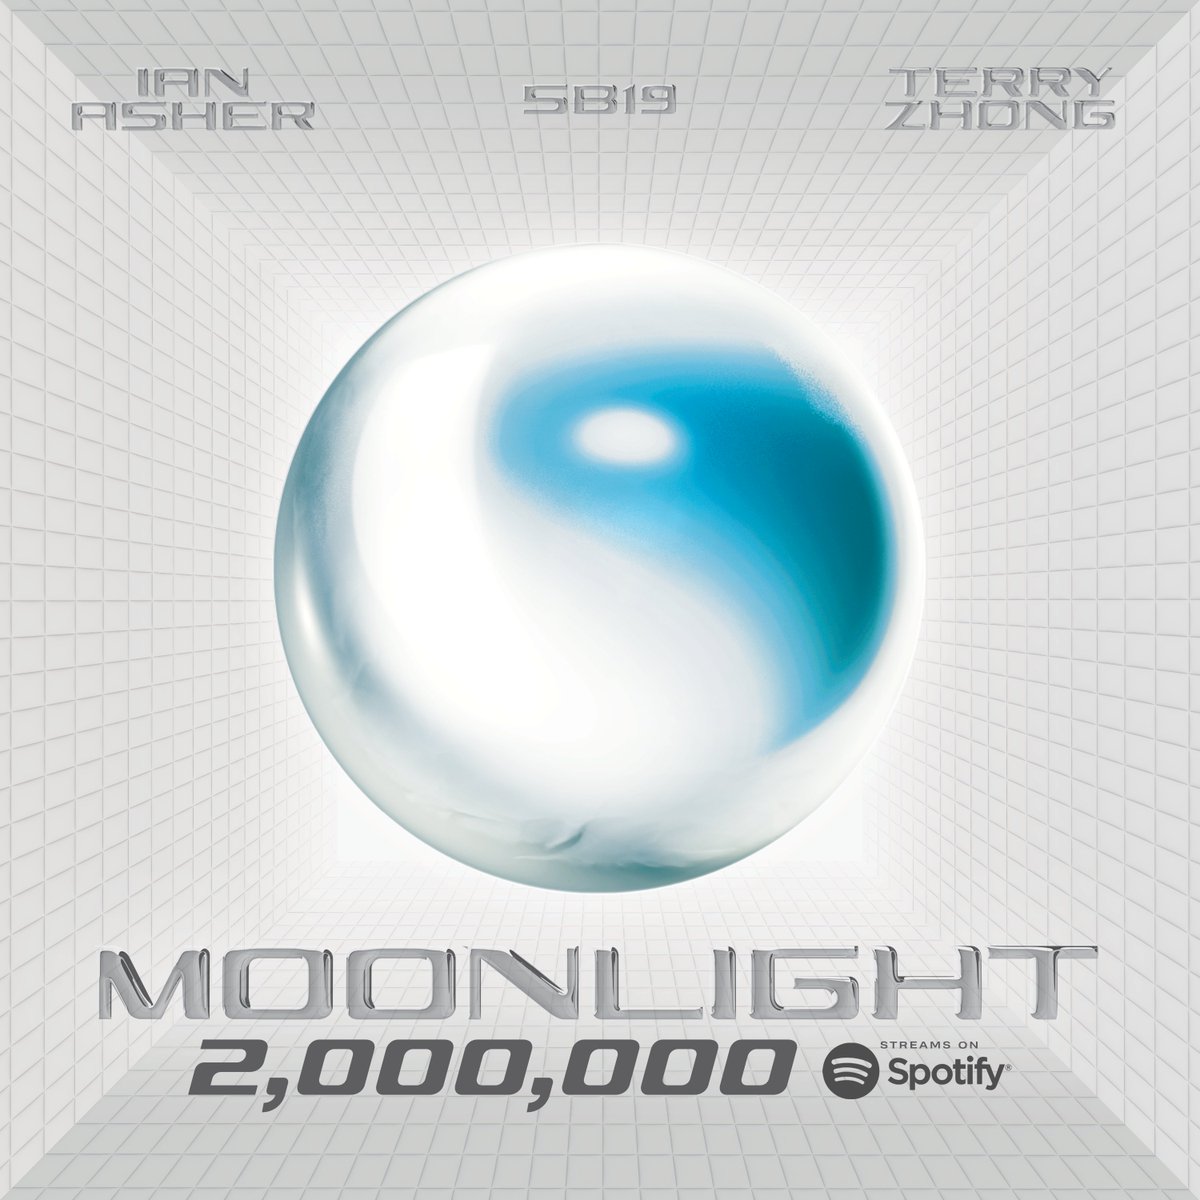 ⚪️ MOONLIGHT 2 MILLION SPOTIFY STREAMS We're over the moon! 🎶 Celebrating 2,000,000 streams of Moonlight on Spotify! Stream 'MOONLIGHT' here: 🎧 orcd.co/inthemoonlight 🎬 youtube.com/watch?v=_WIGlf… #SB19 #MOONLIGHT_2MILLIONStreams